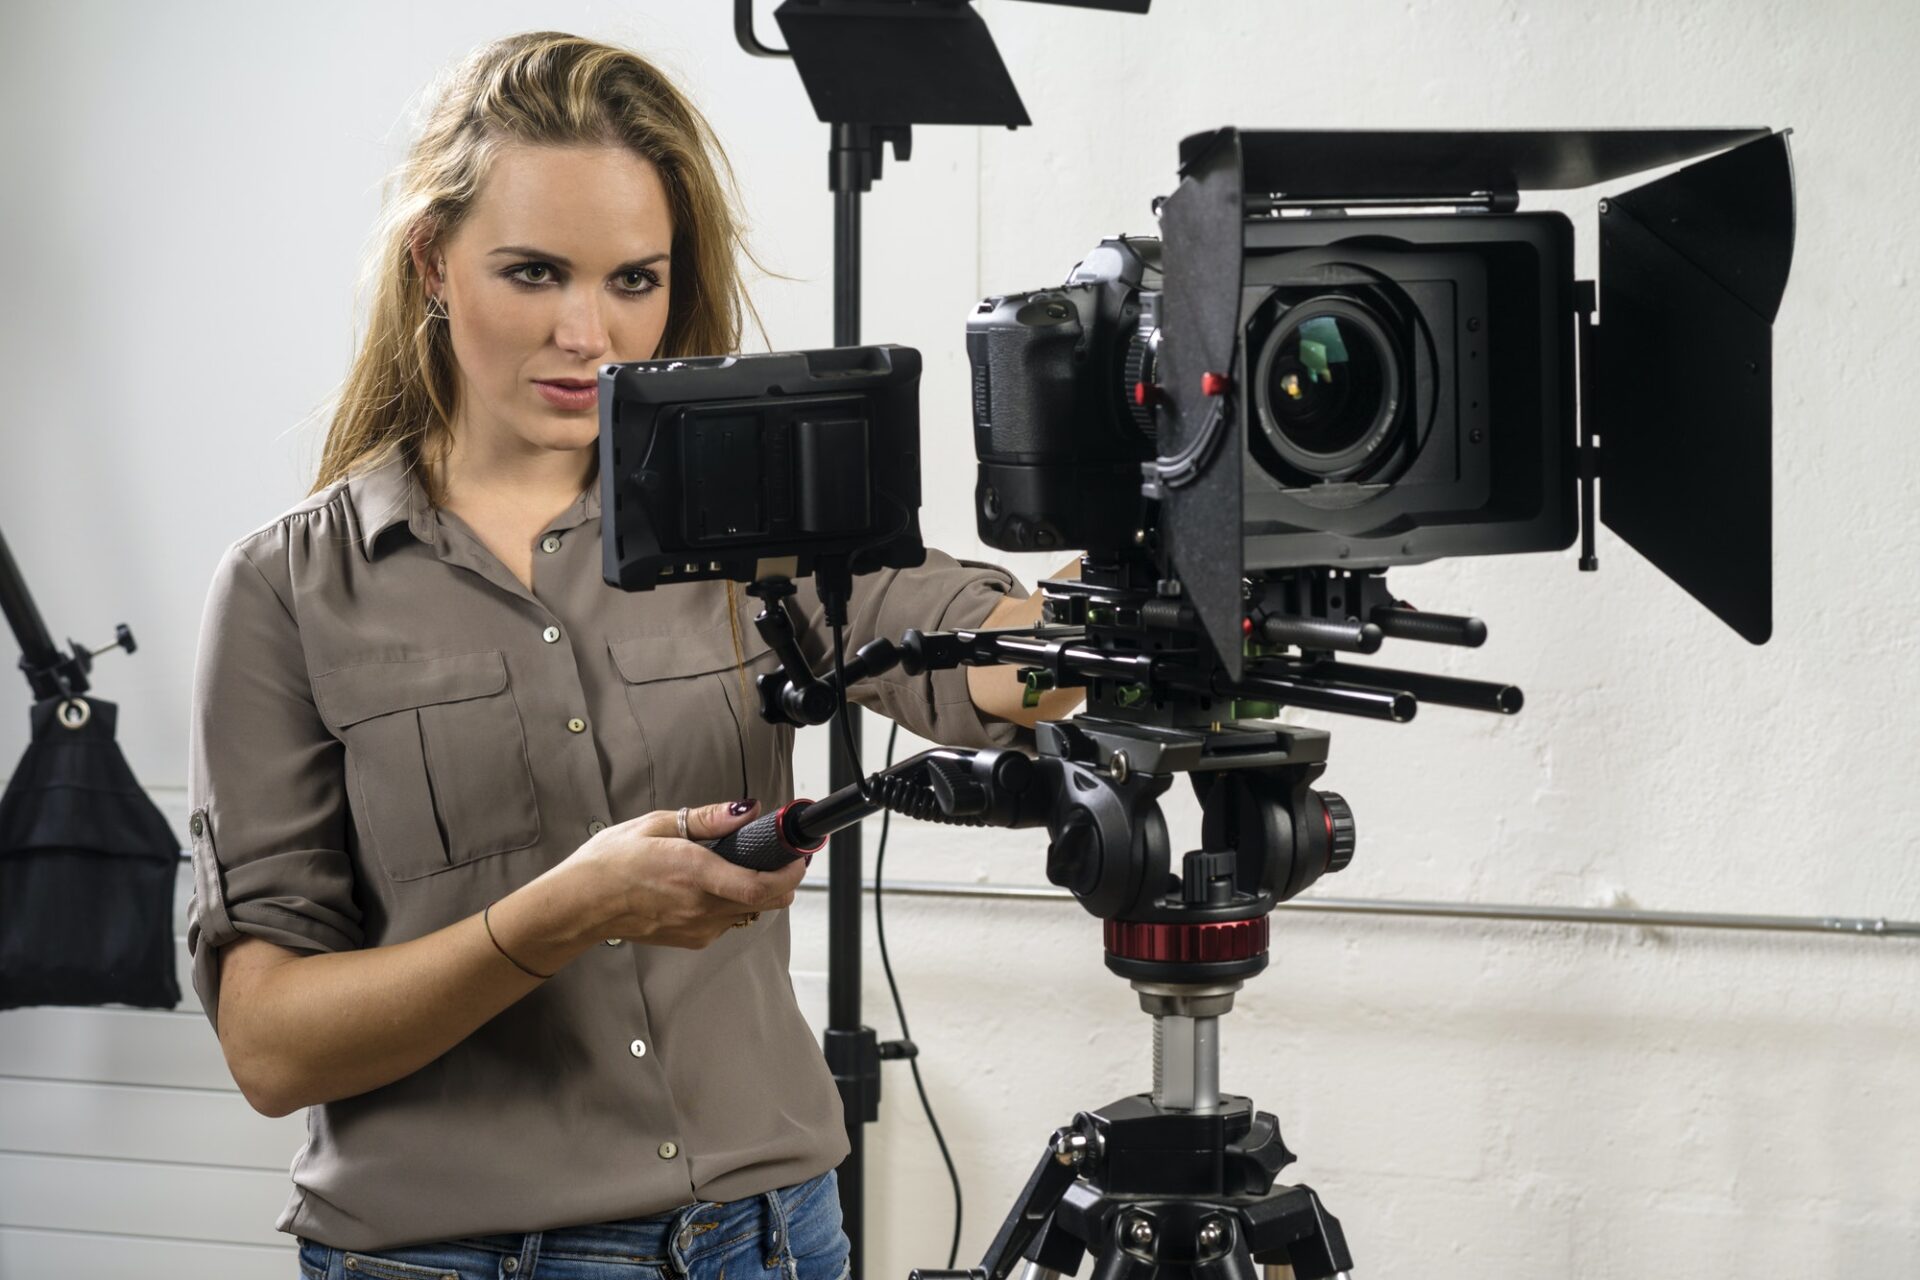 Beautiful woman operating a video camera rig